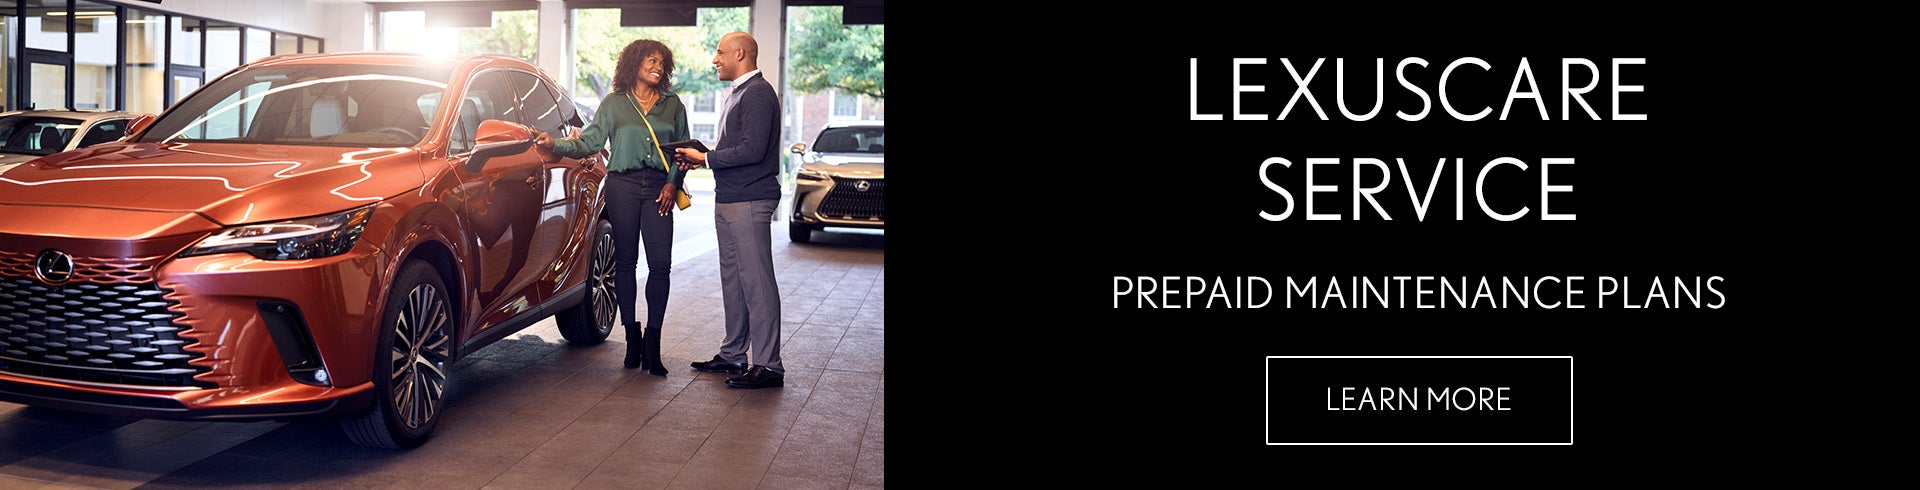 LexusCare Pre-Paid Maintenance